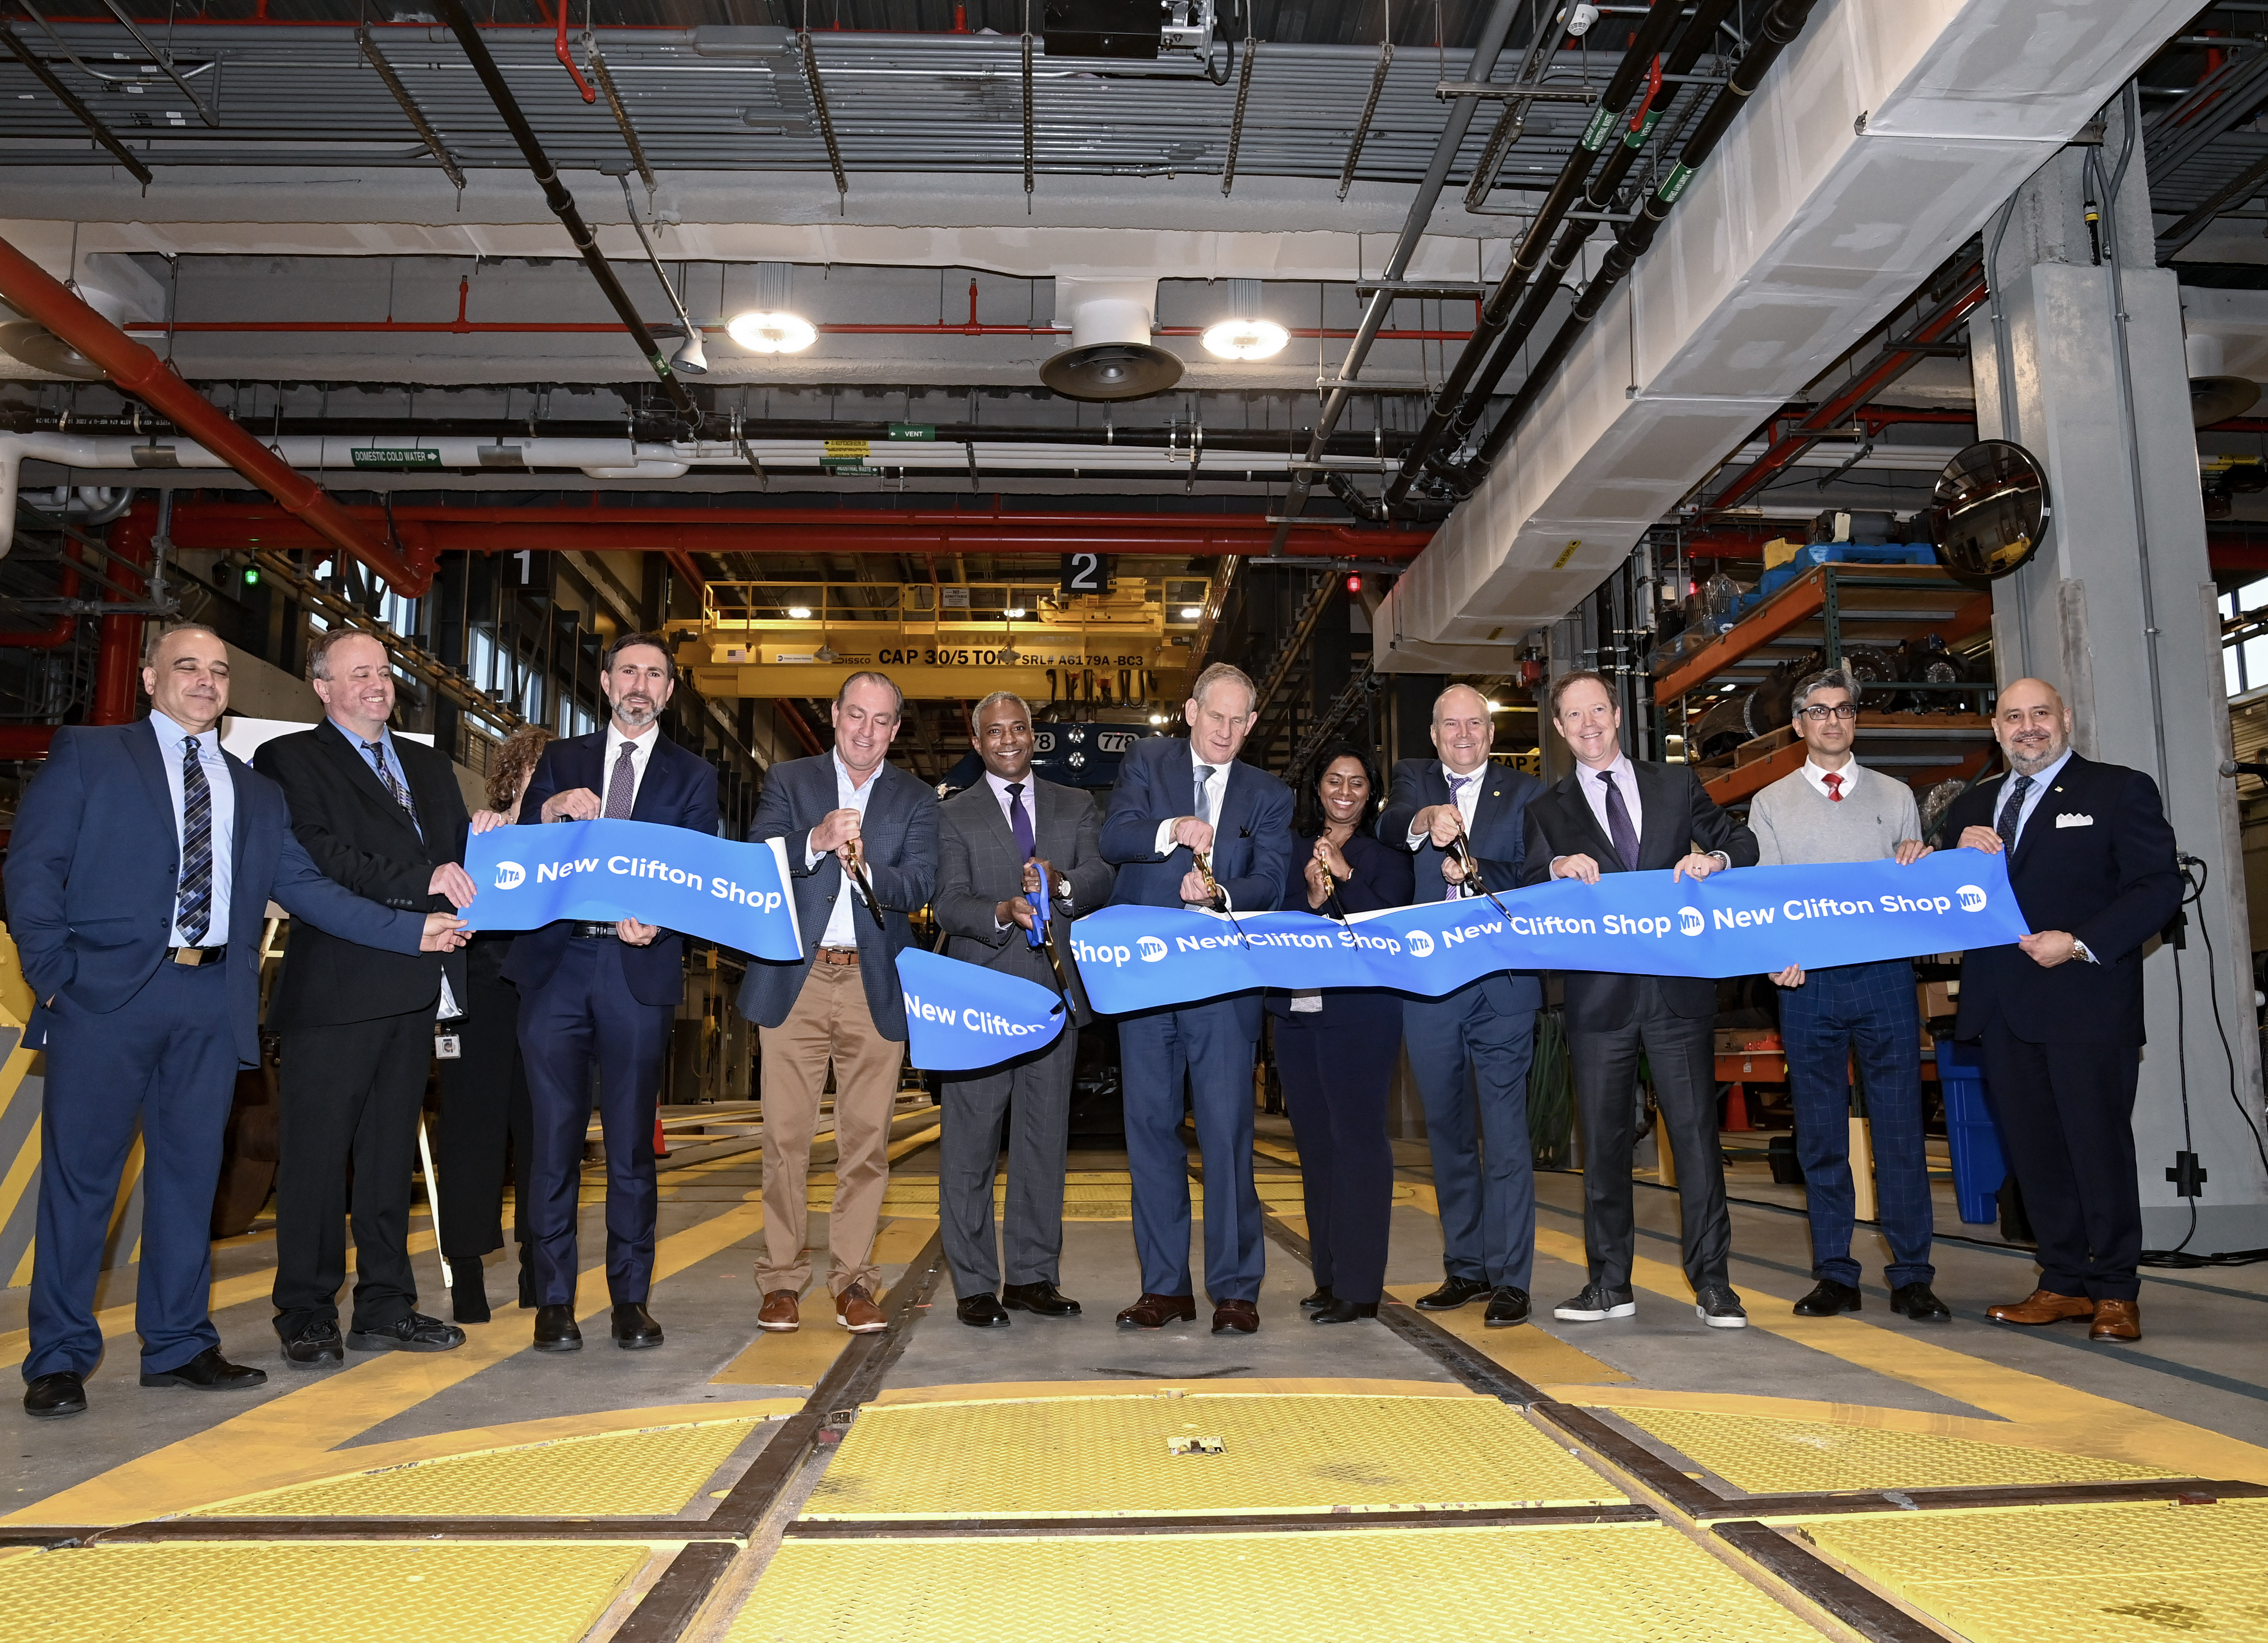 MTA Opens Staten Island Railway’s Hurricane-Resistant Clifton Maintenance Shop